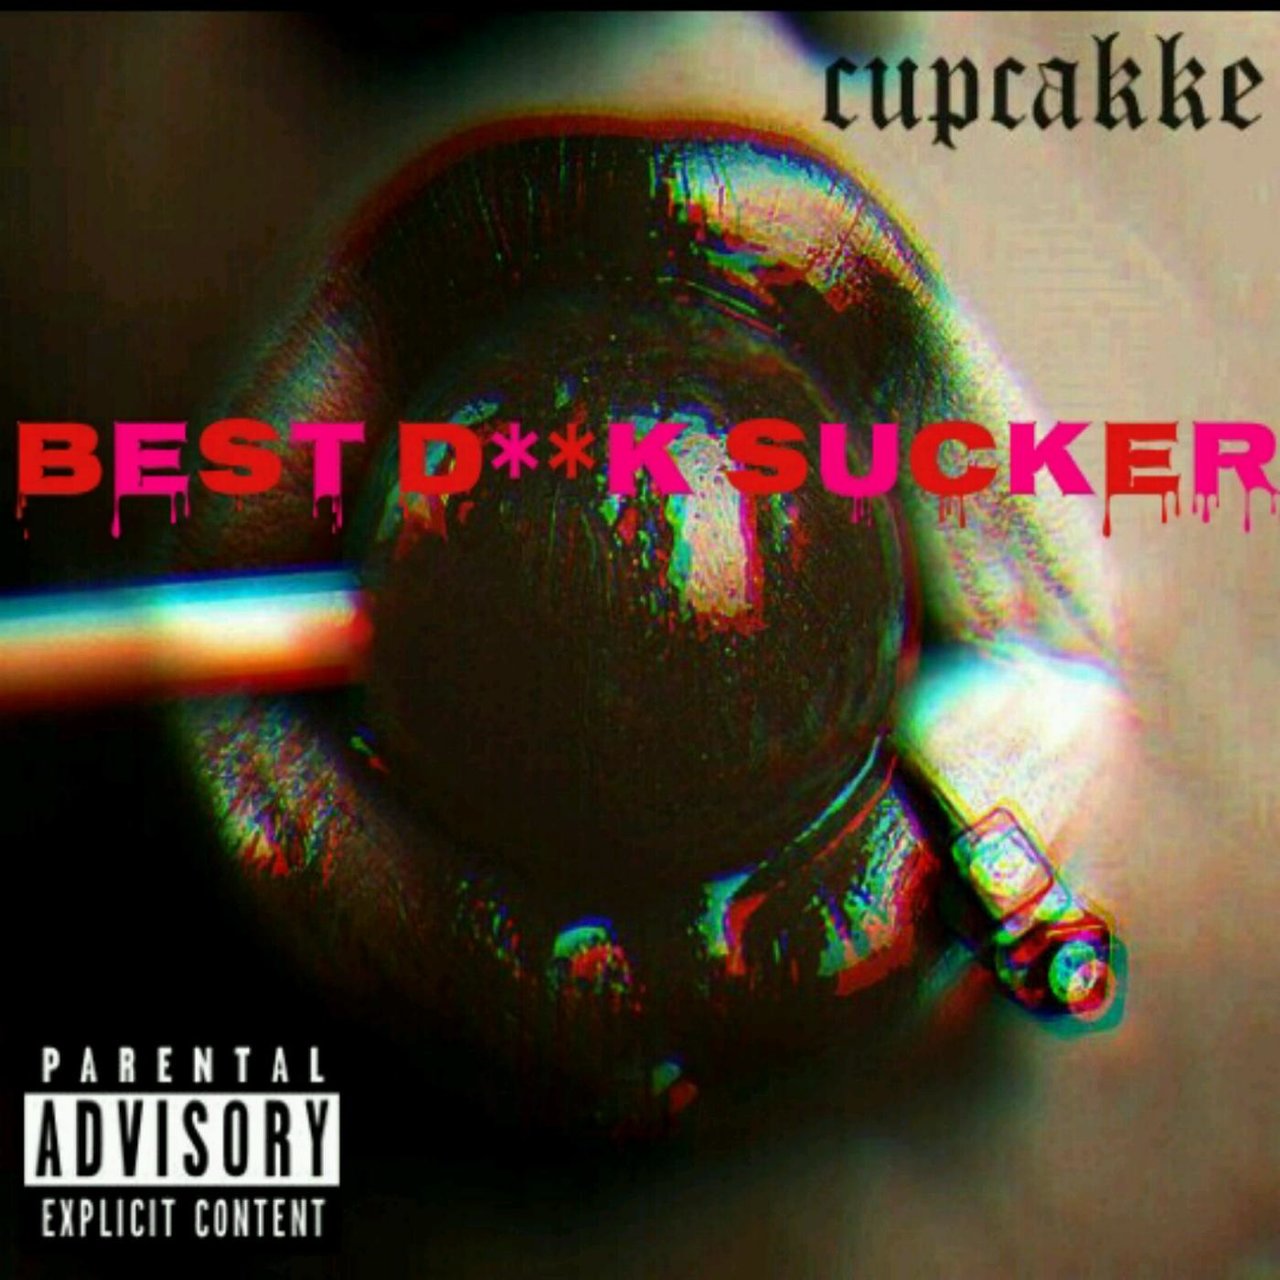 CupcakKe Best Dick Sucker cover artwork